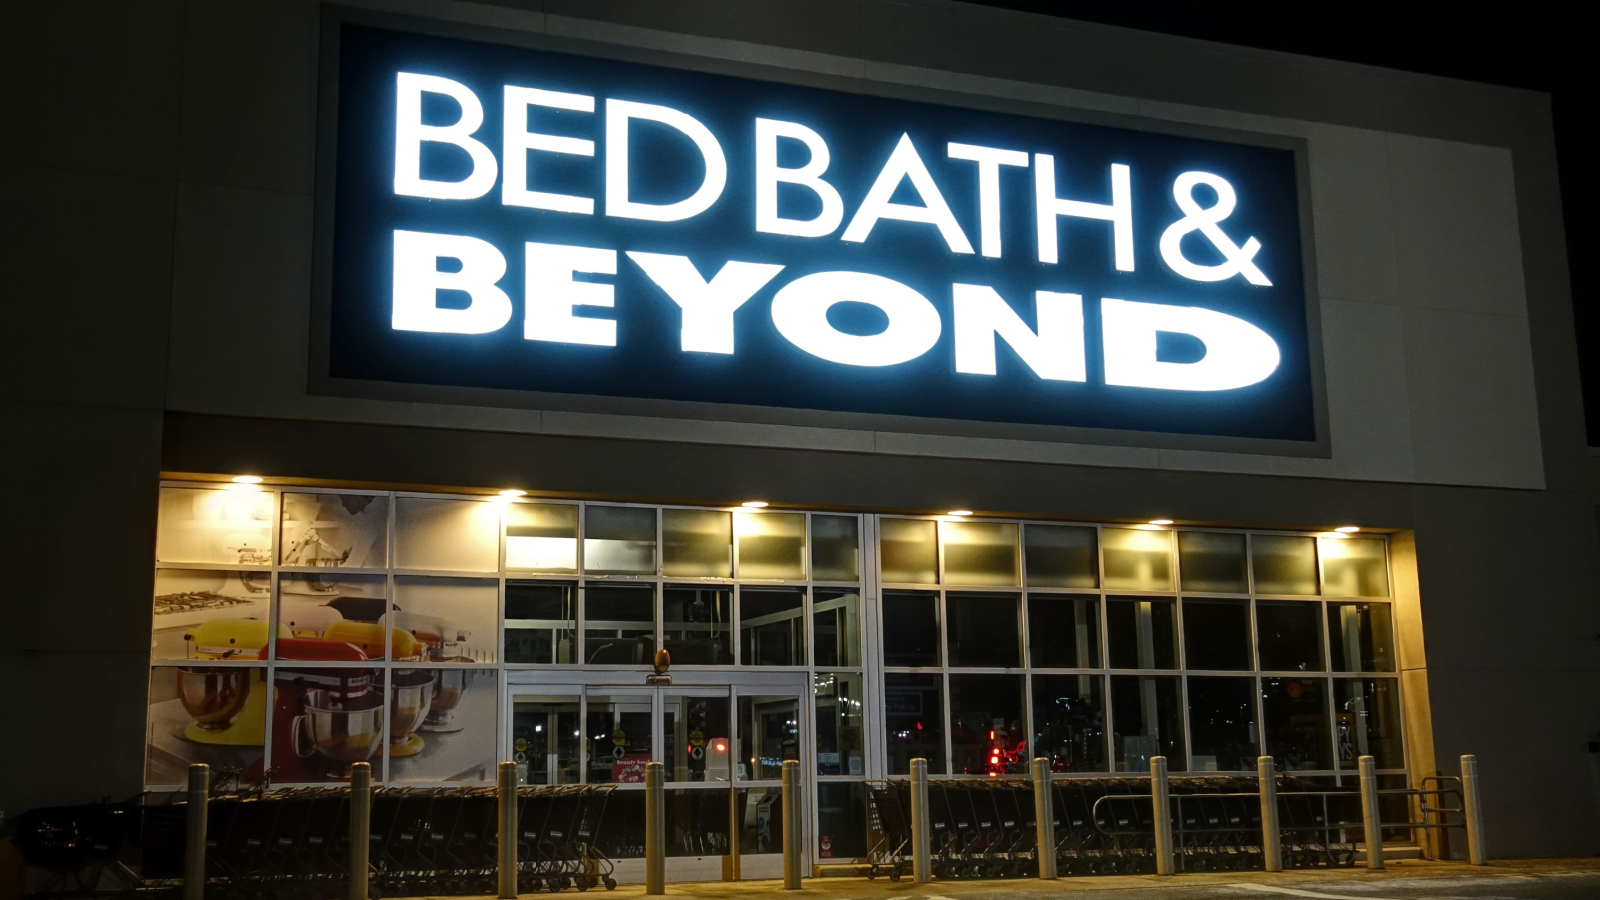 HDR image, Bed Bath & Beyond (BBBYQ) retailer storefront entrance